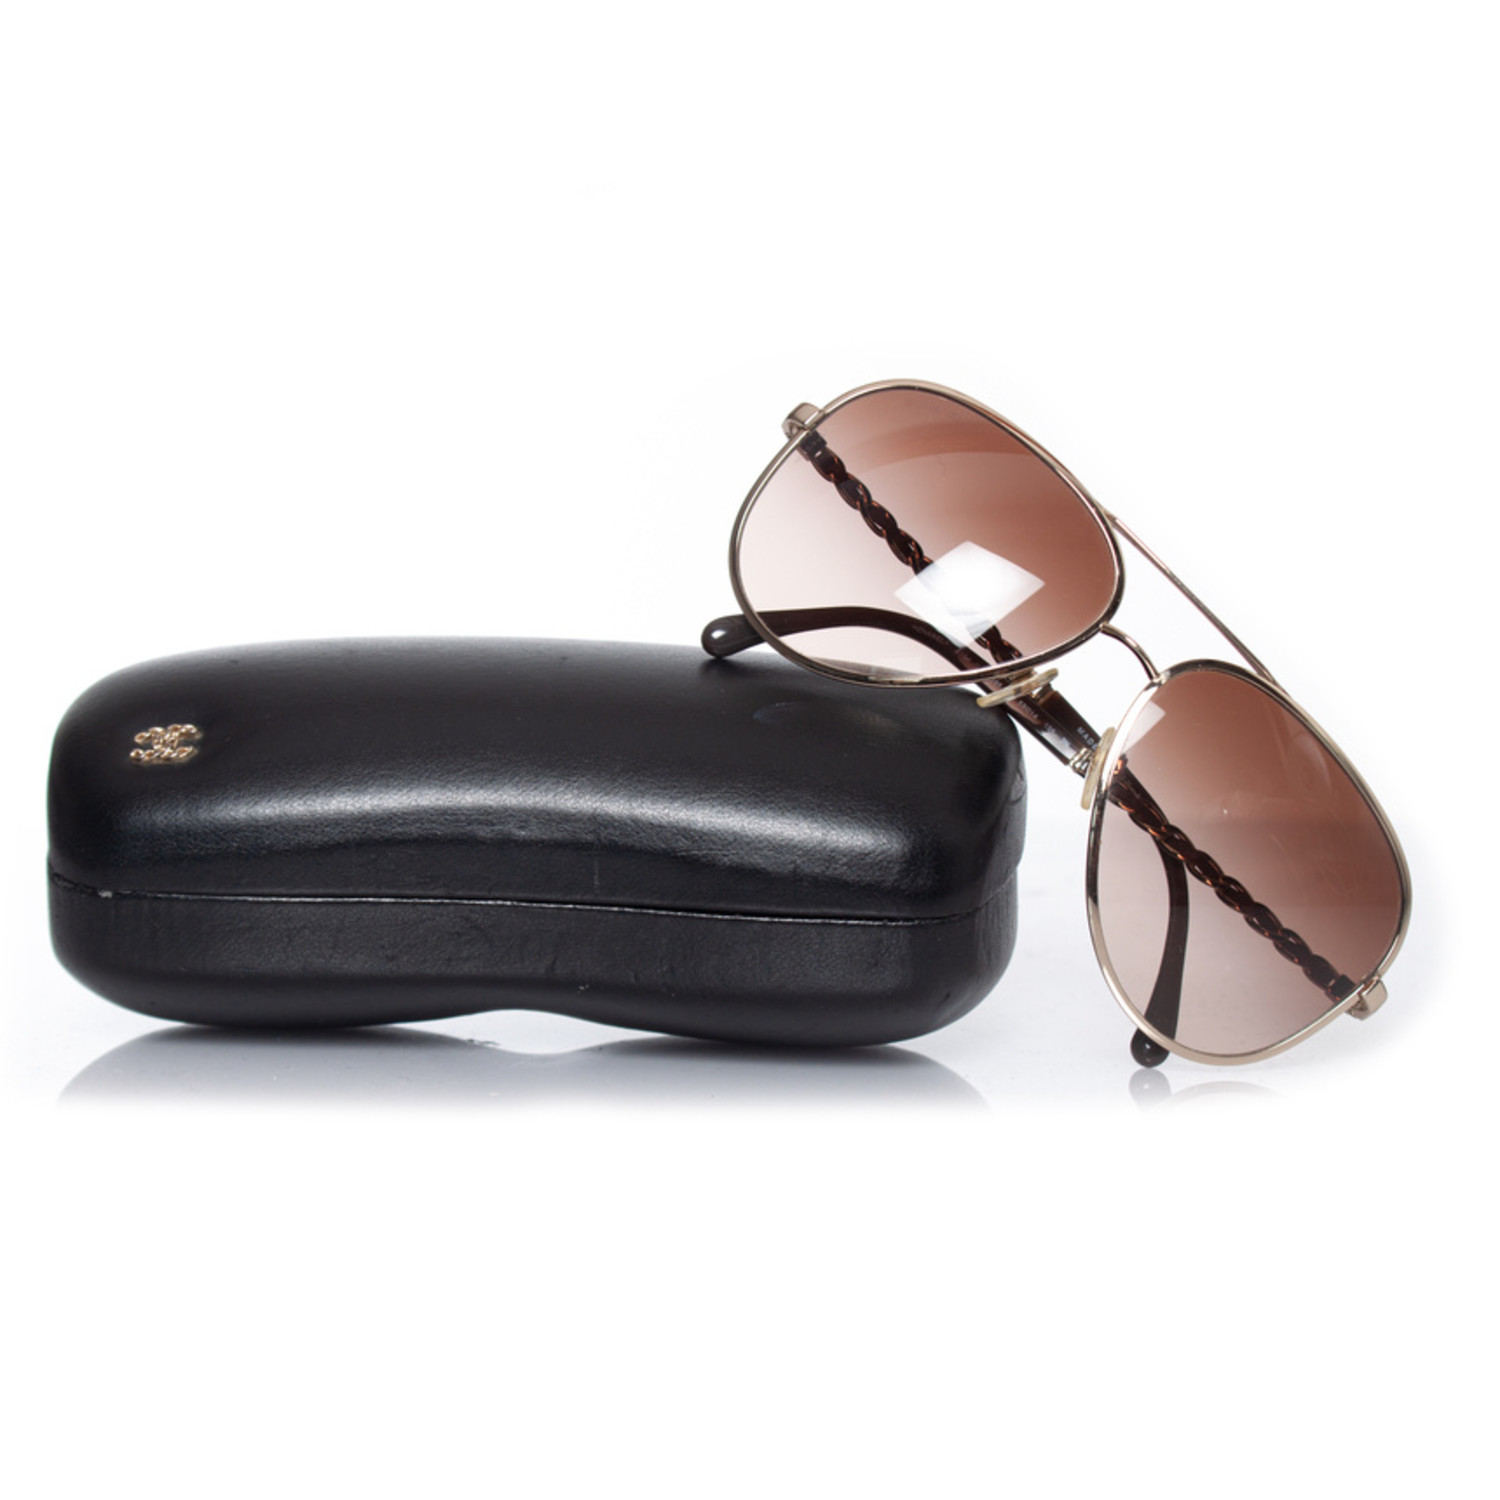 chanel aviator sunglasses for women